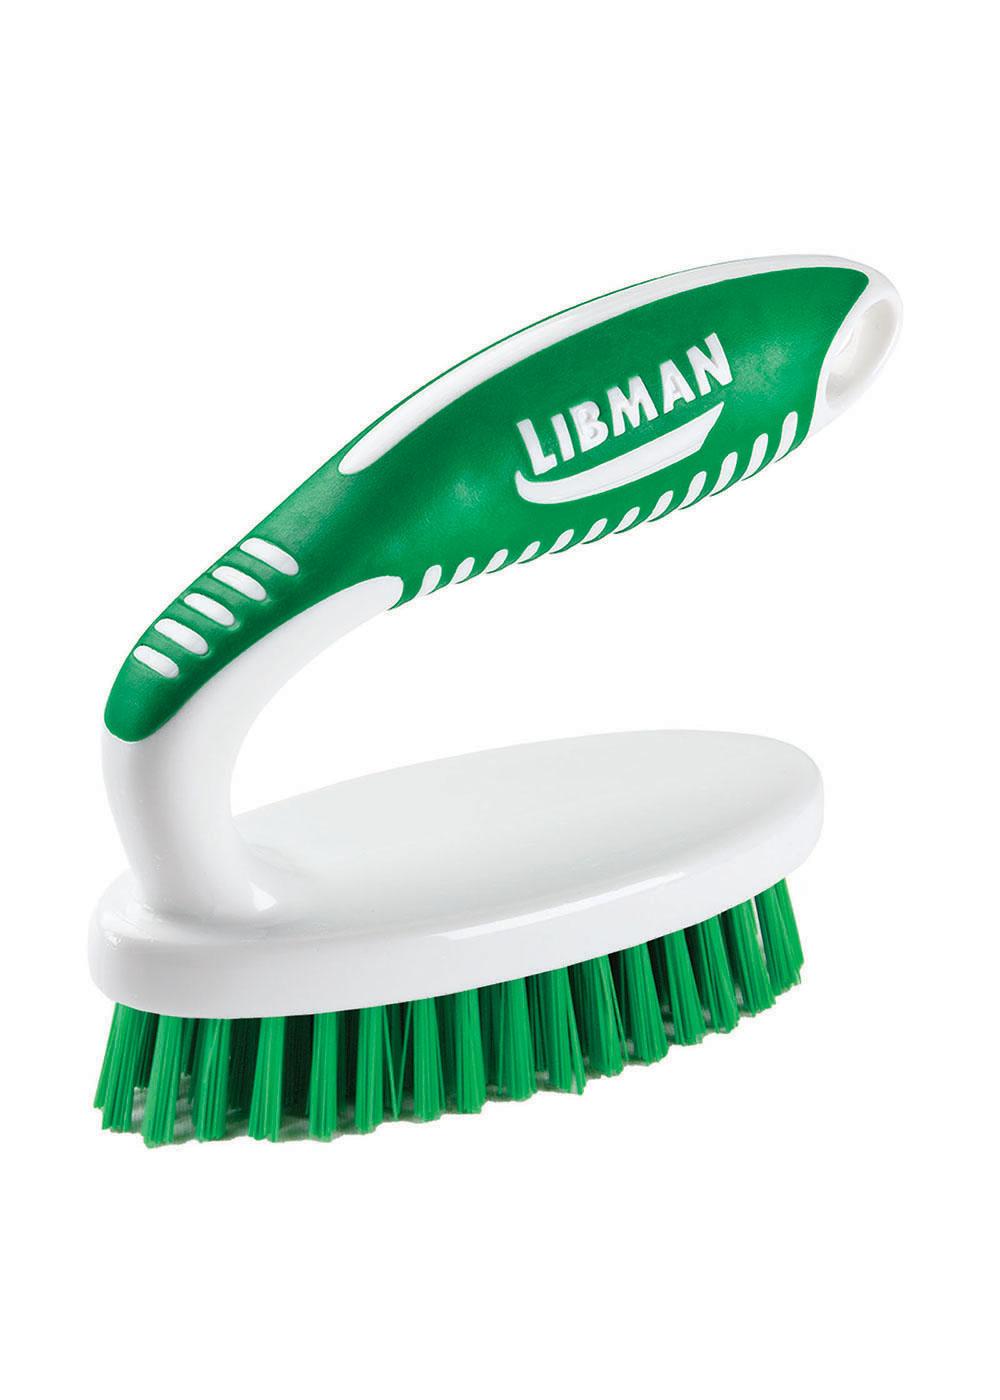 Libman Small Scrub Brush - Shop Brushes at H-E-B